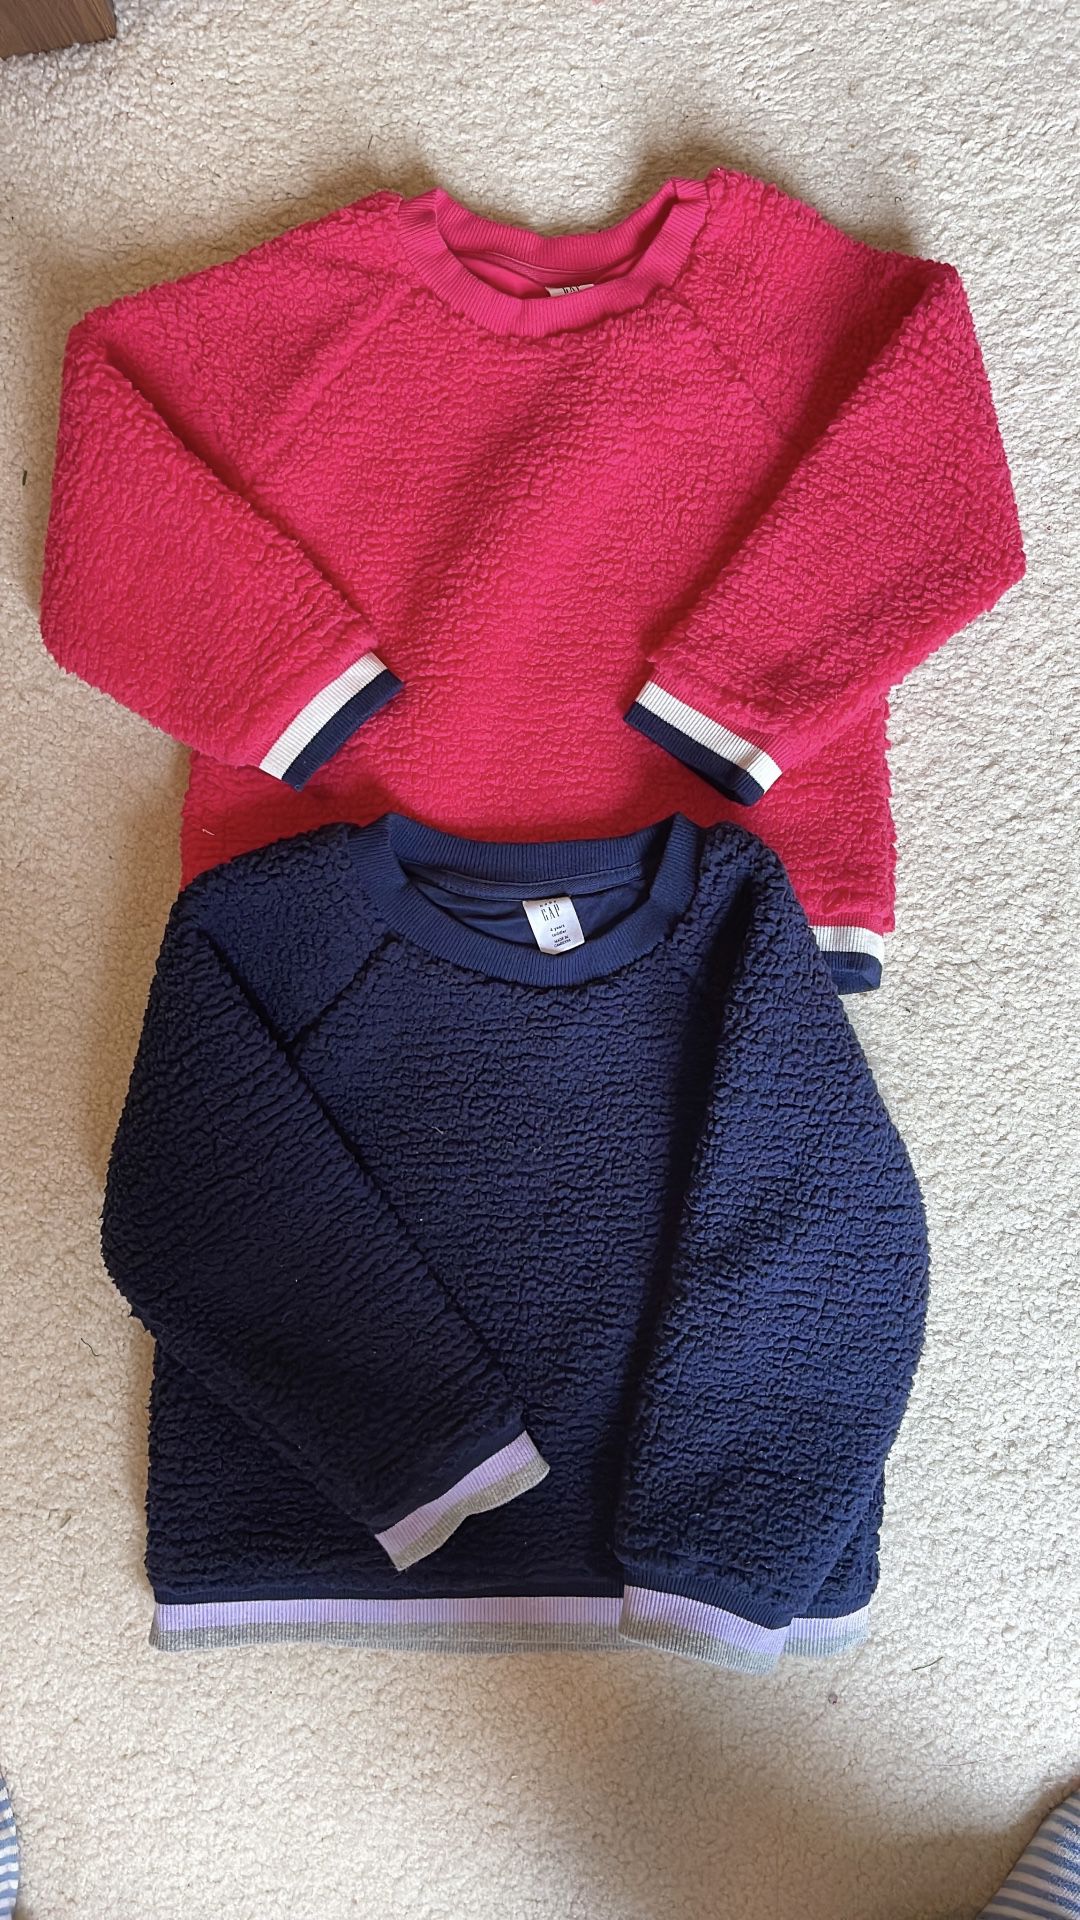 Bundle of BabyGAP Sweater Sweatshirts Pink and Navy, 4T